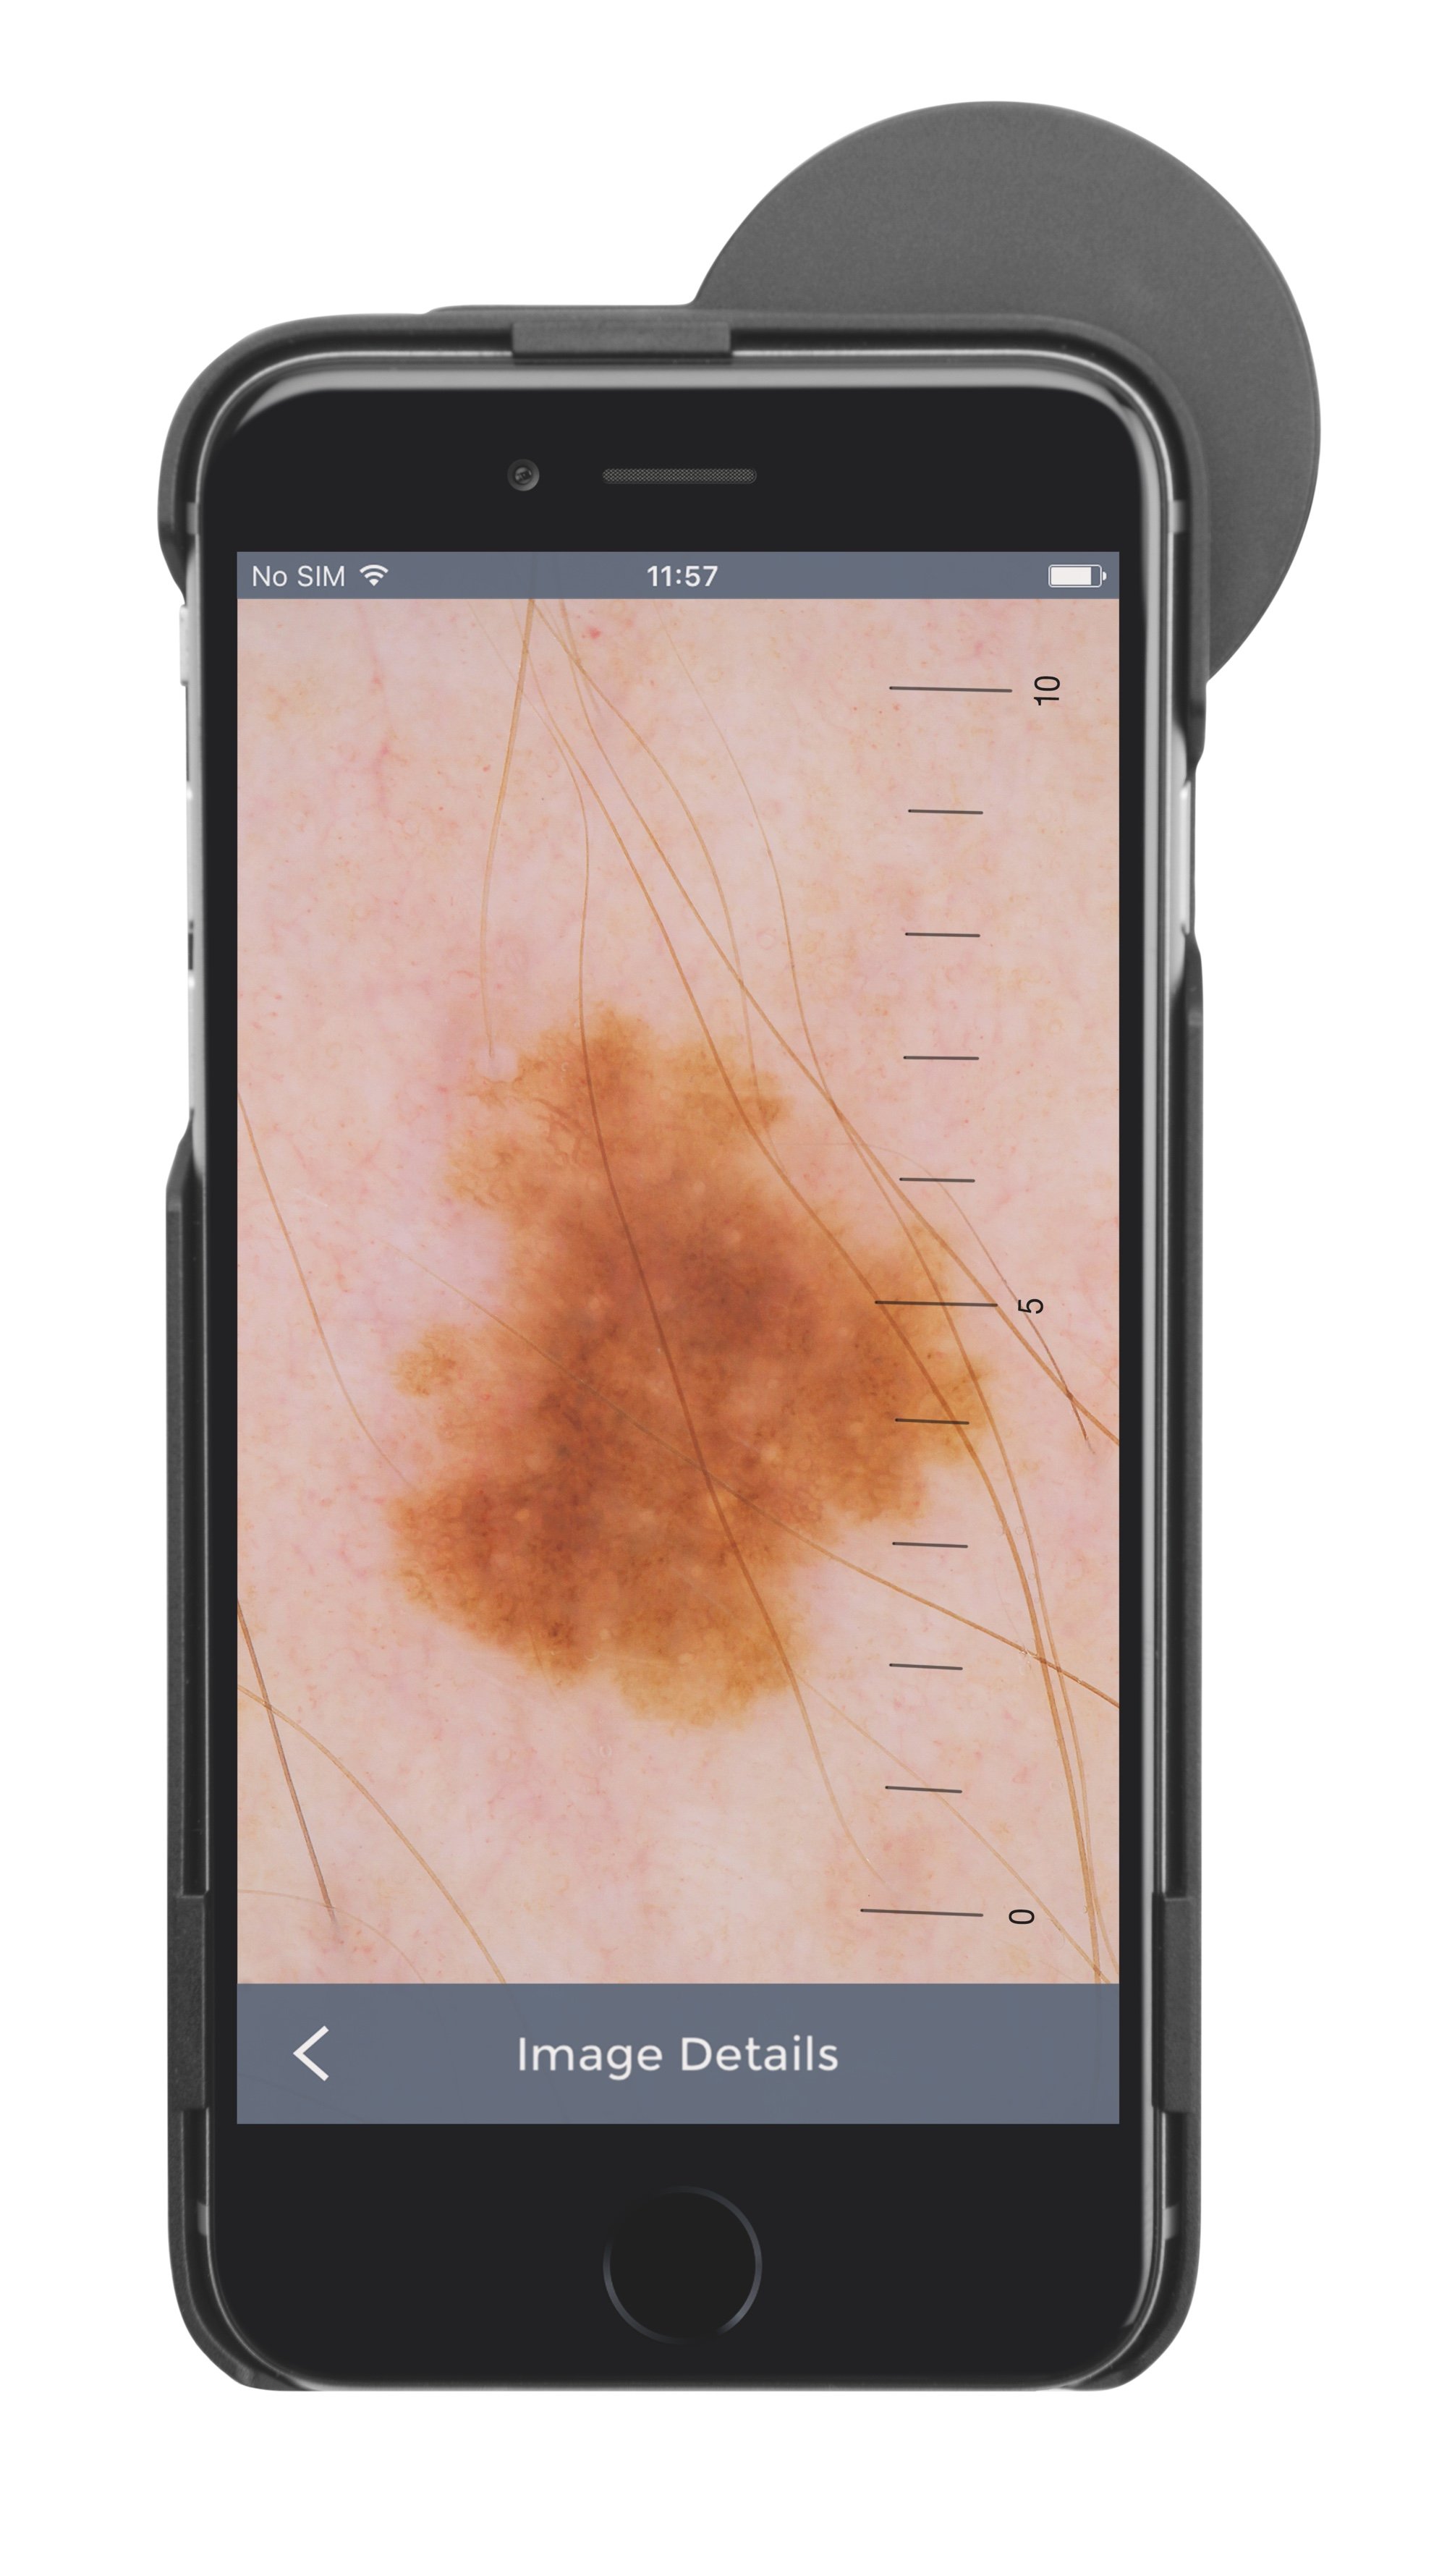 HEINE iC 1 Dermatoscope for iPhone 6/6s